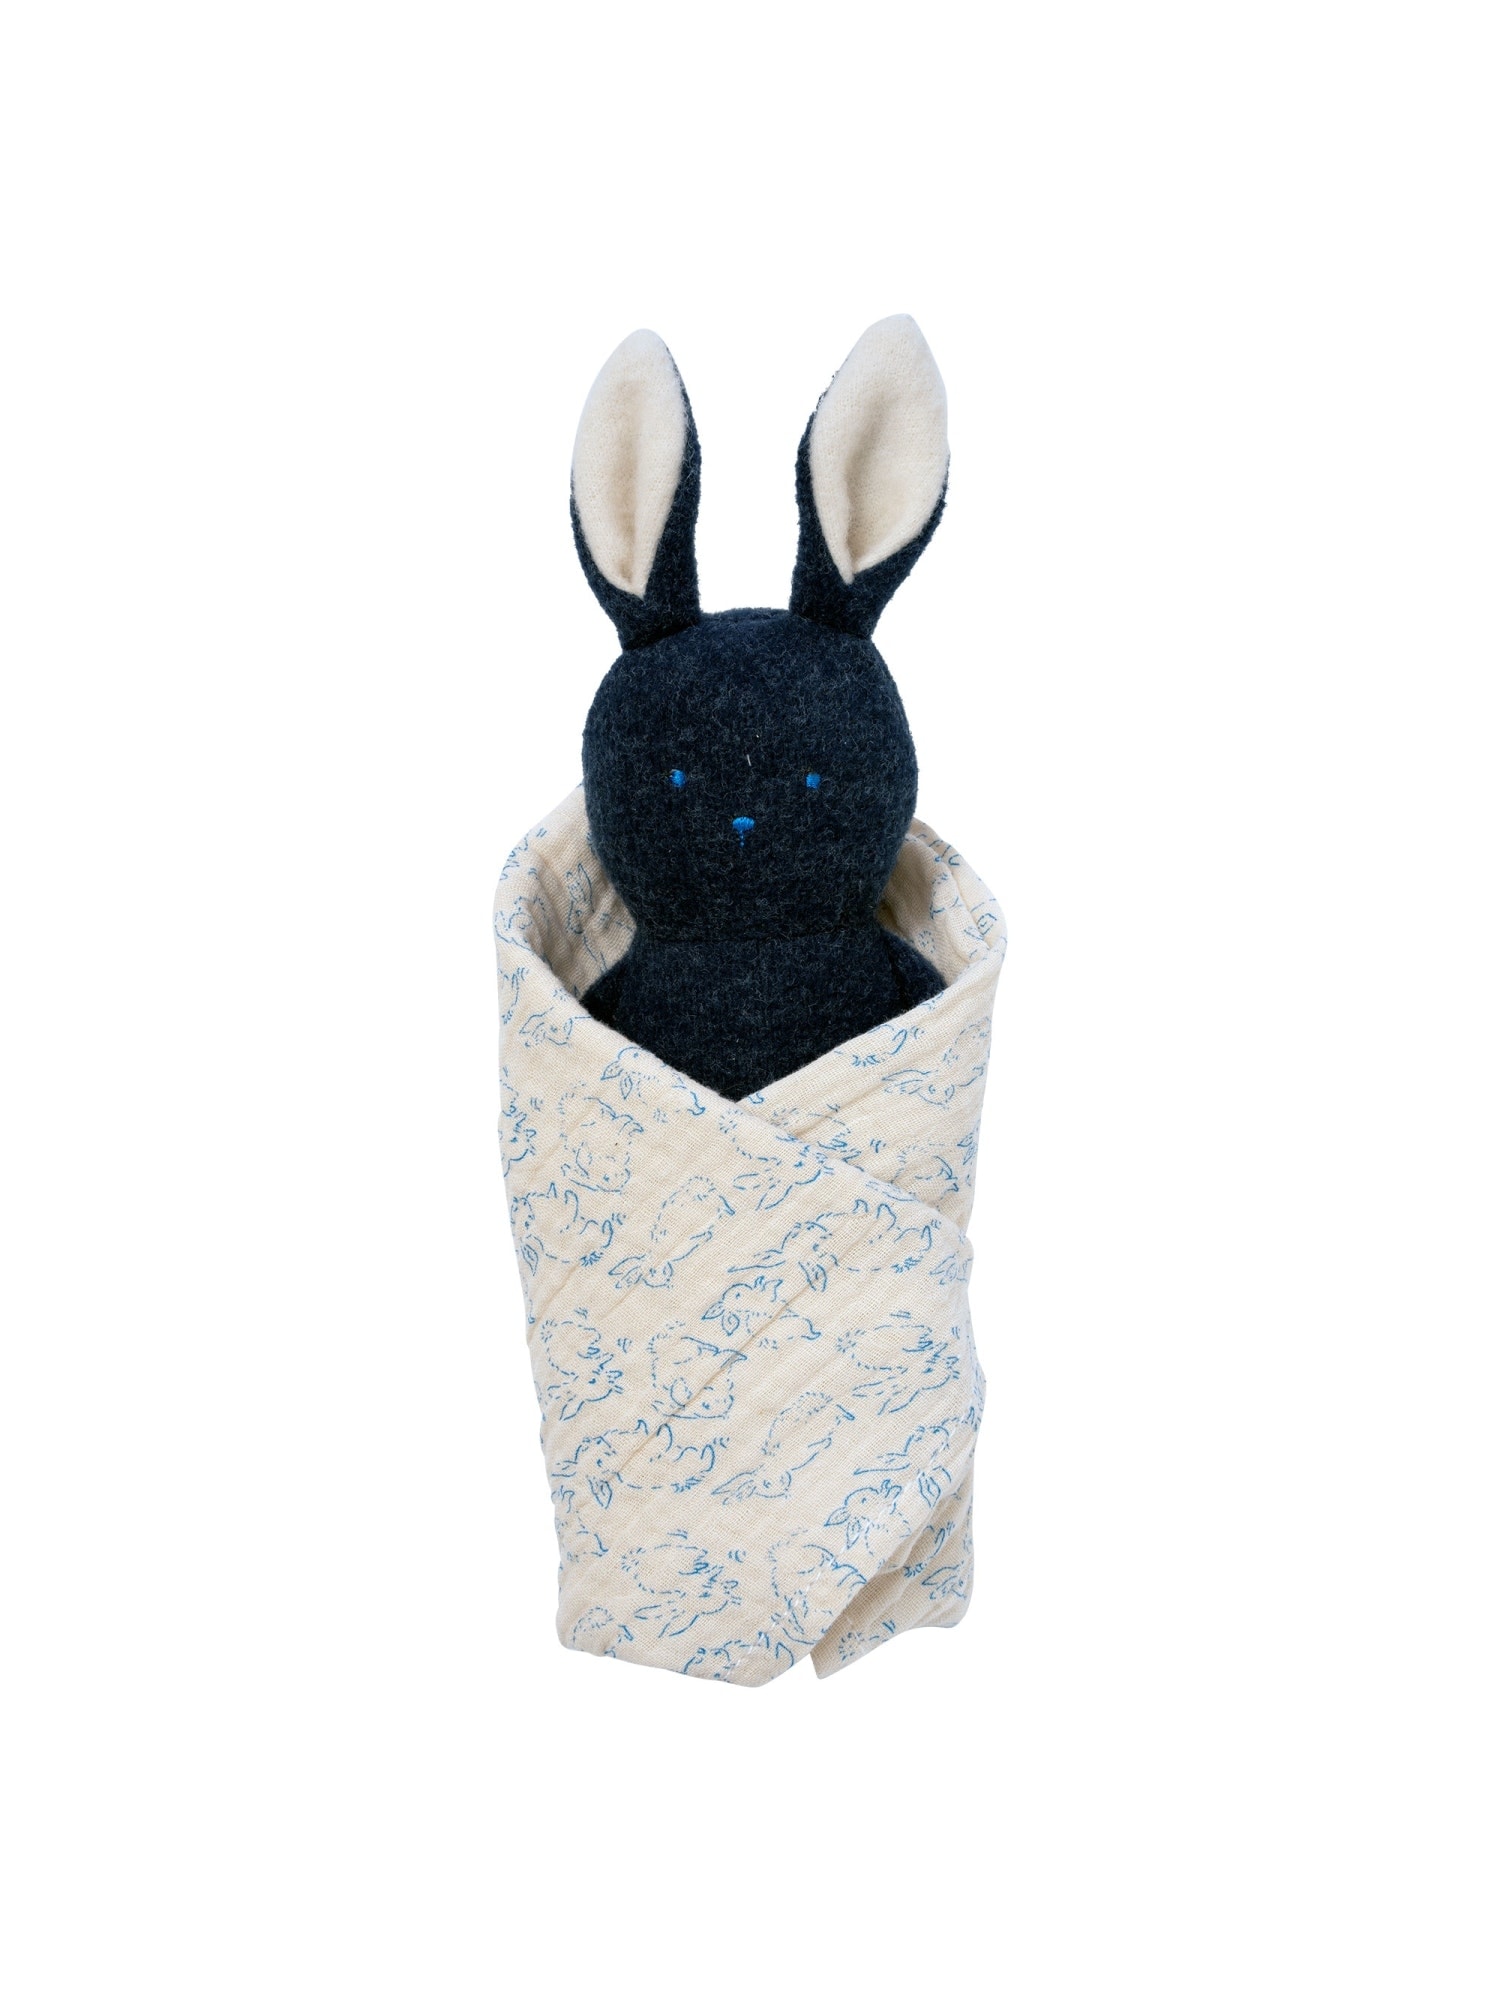 Gap Bunny Rattle and Burp Cloth